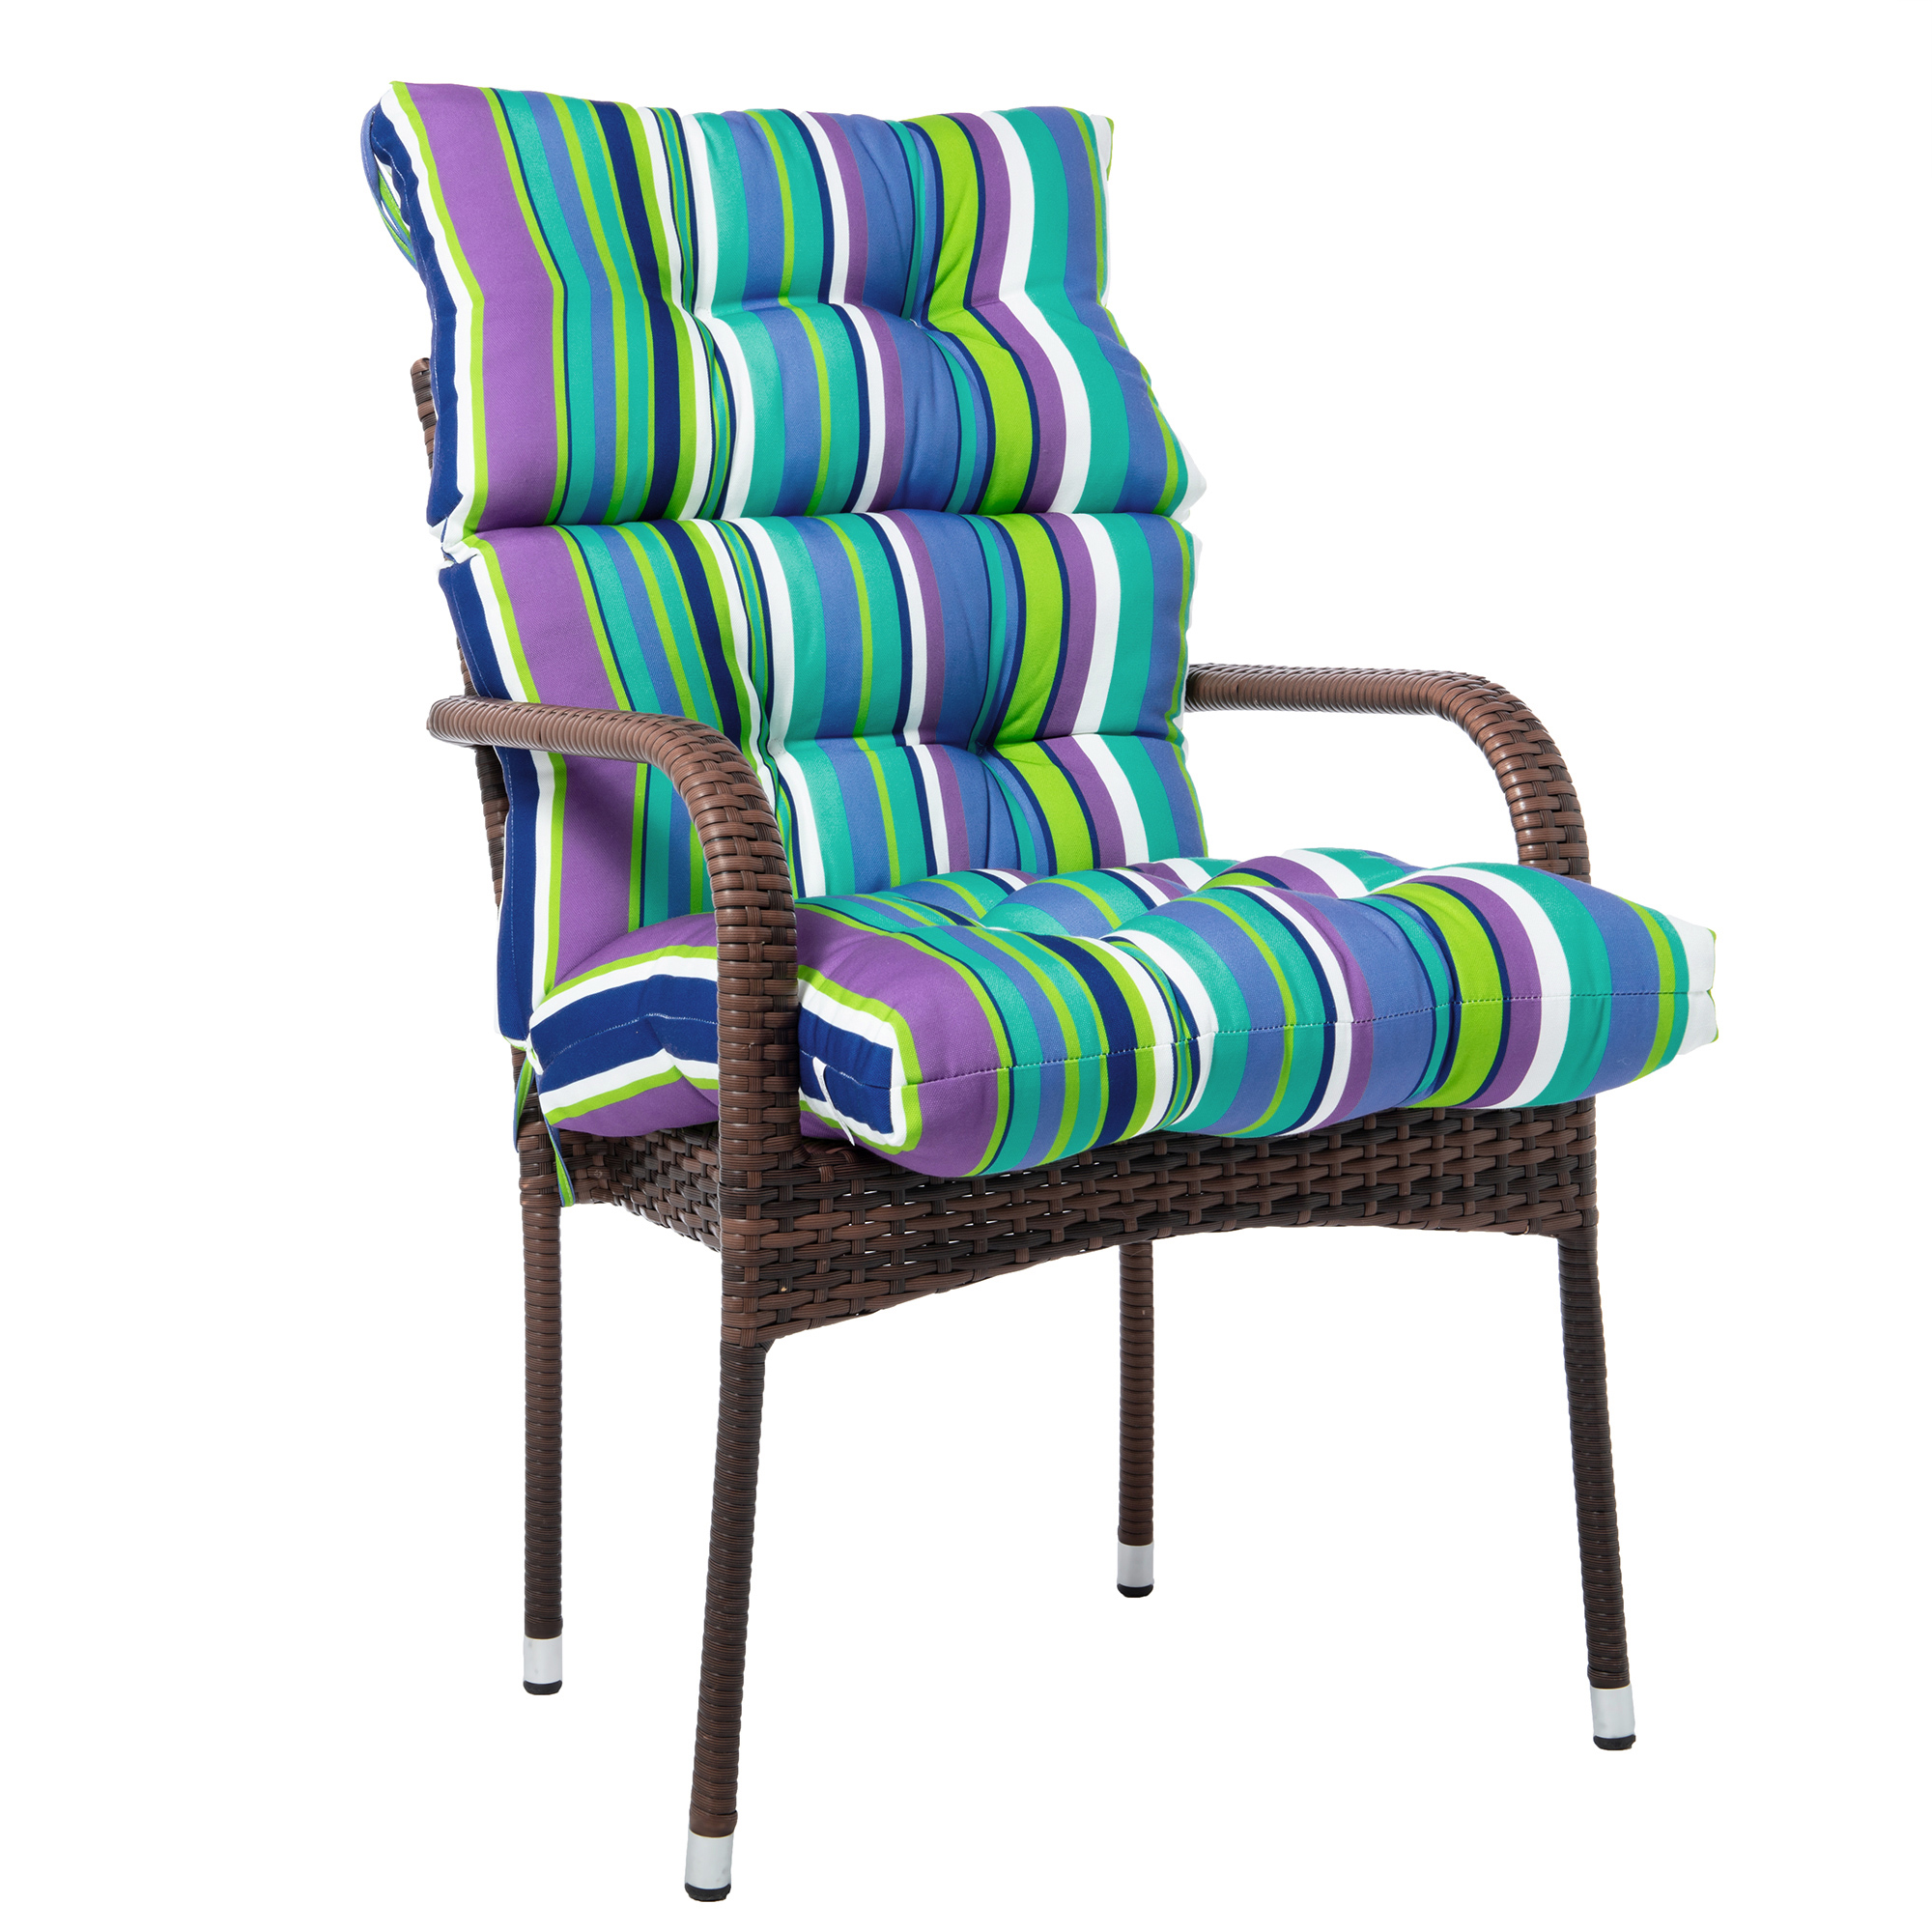 44x21 inch Outdoor Chair Cushion, 2/4pcs High Back Chair Cushions Patio Garden High Rebound Foam Chair Cushion  Waterproof Polyester Seat Cushions or Home Patio Garden Decor - image 5 of 8